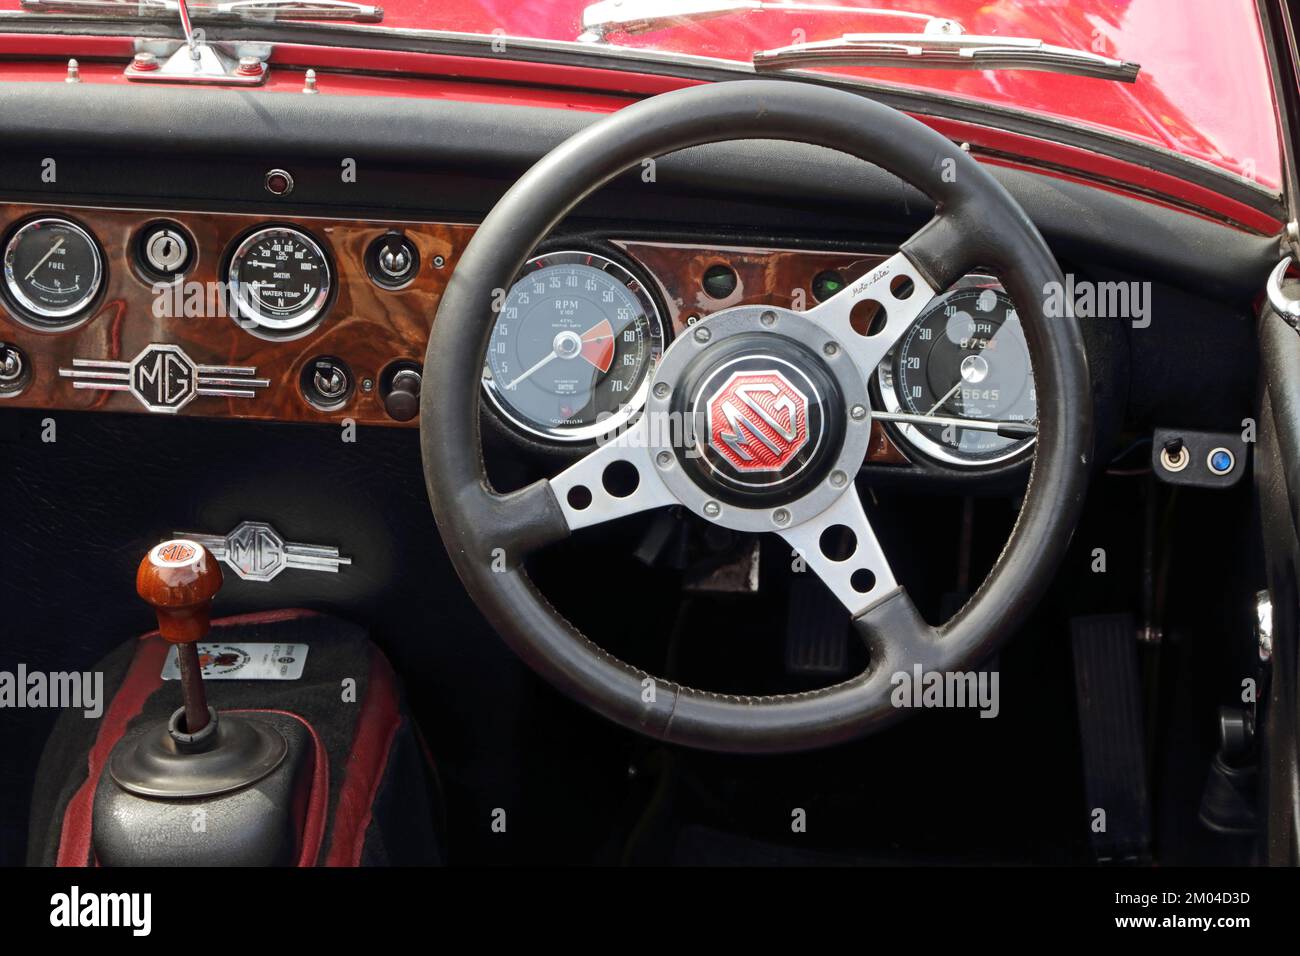 Steering wheel and dashboard of MG Midget sportscar Stock Photo